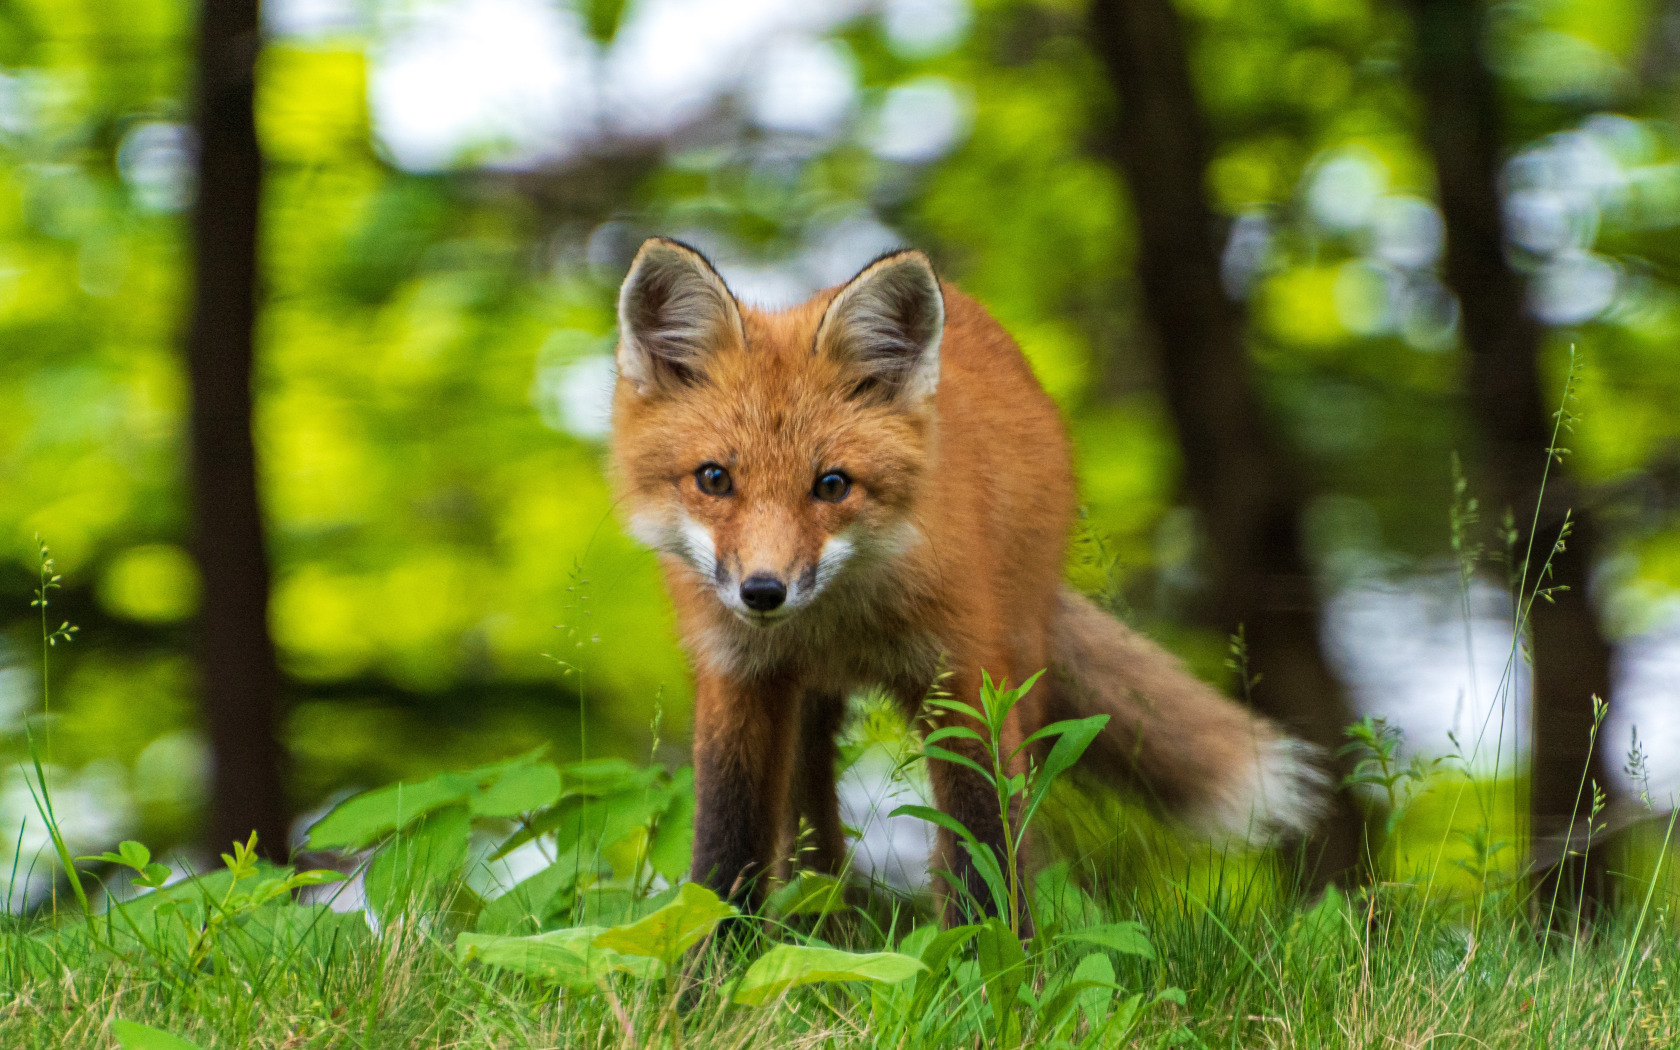 More foxes. Лисы. Лиса в траве. Лиса обои. Молодая лисица.